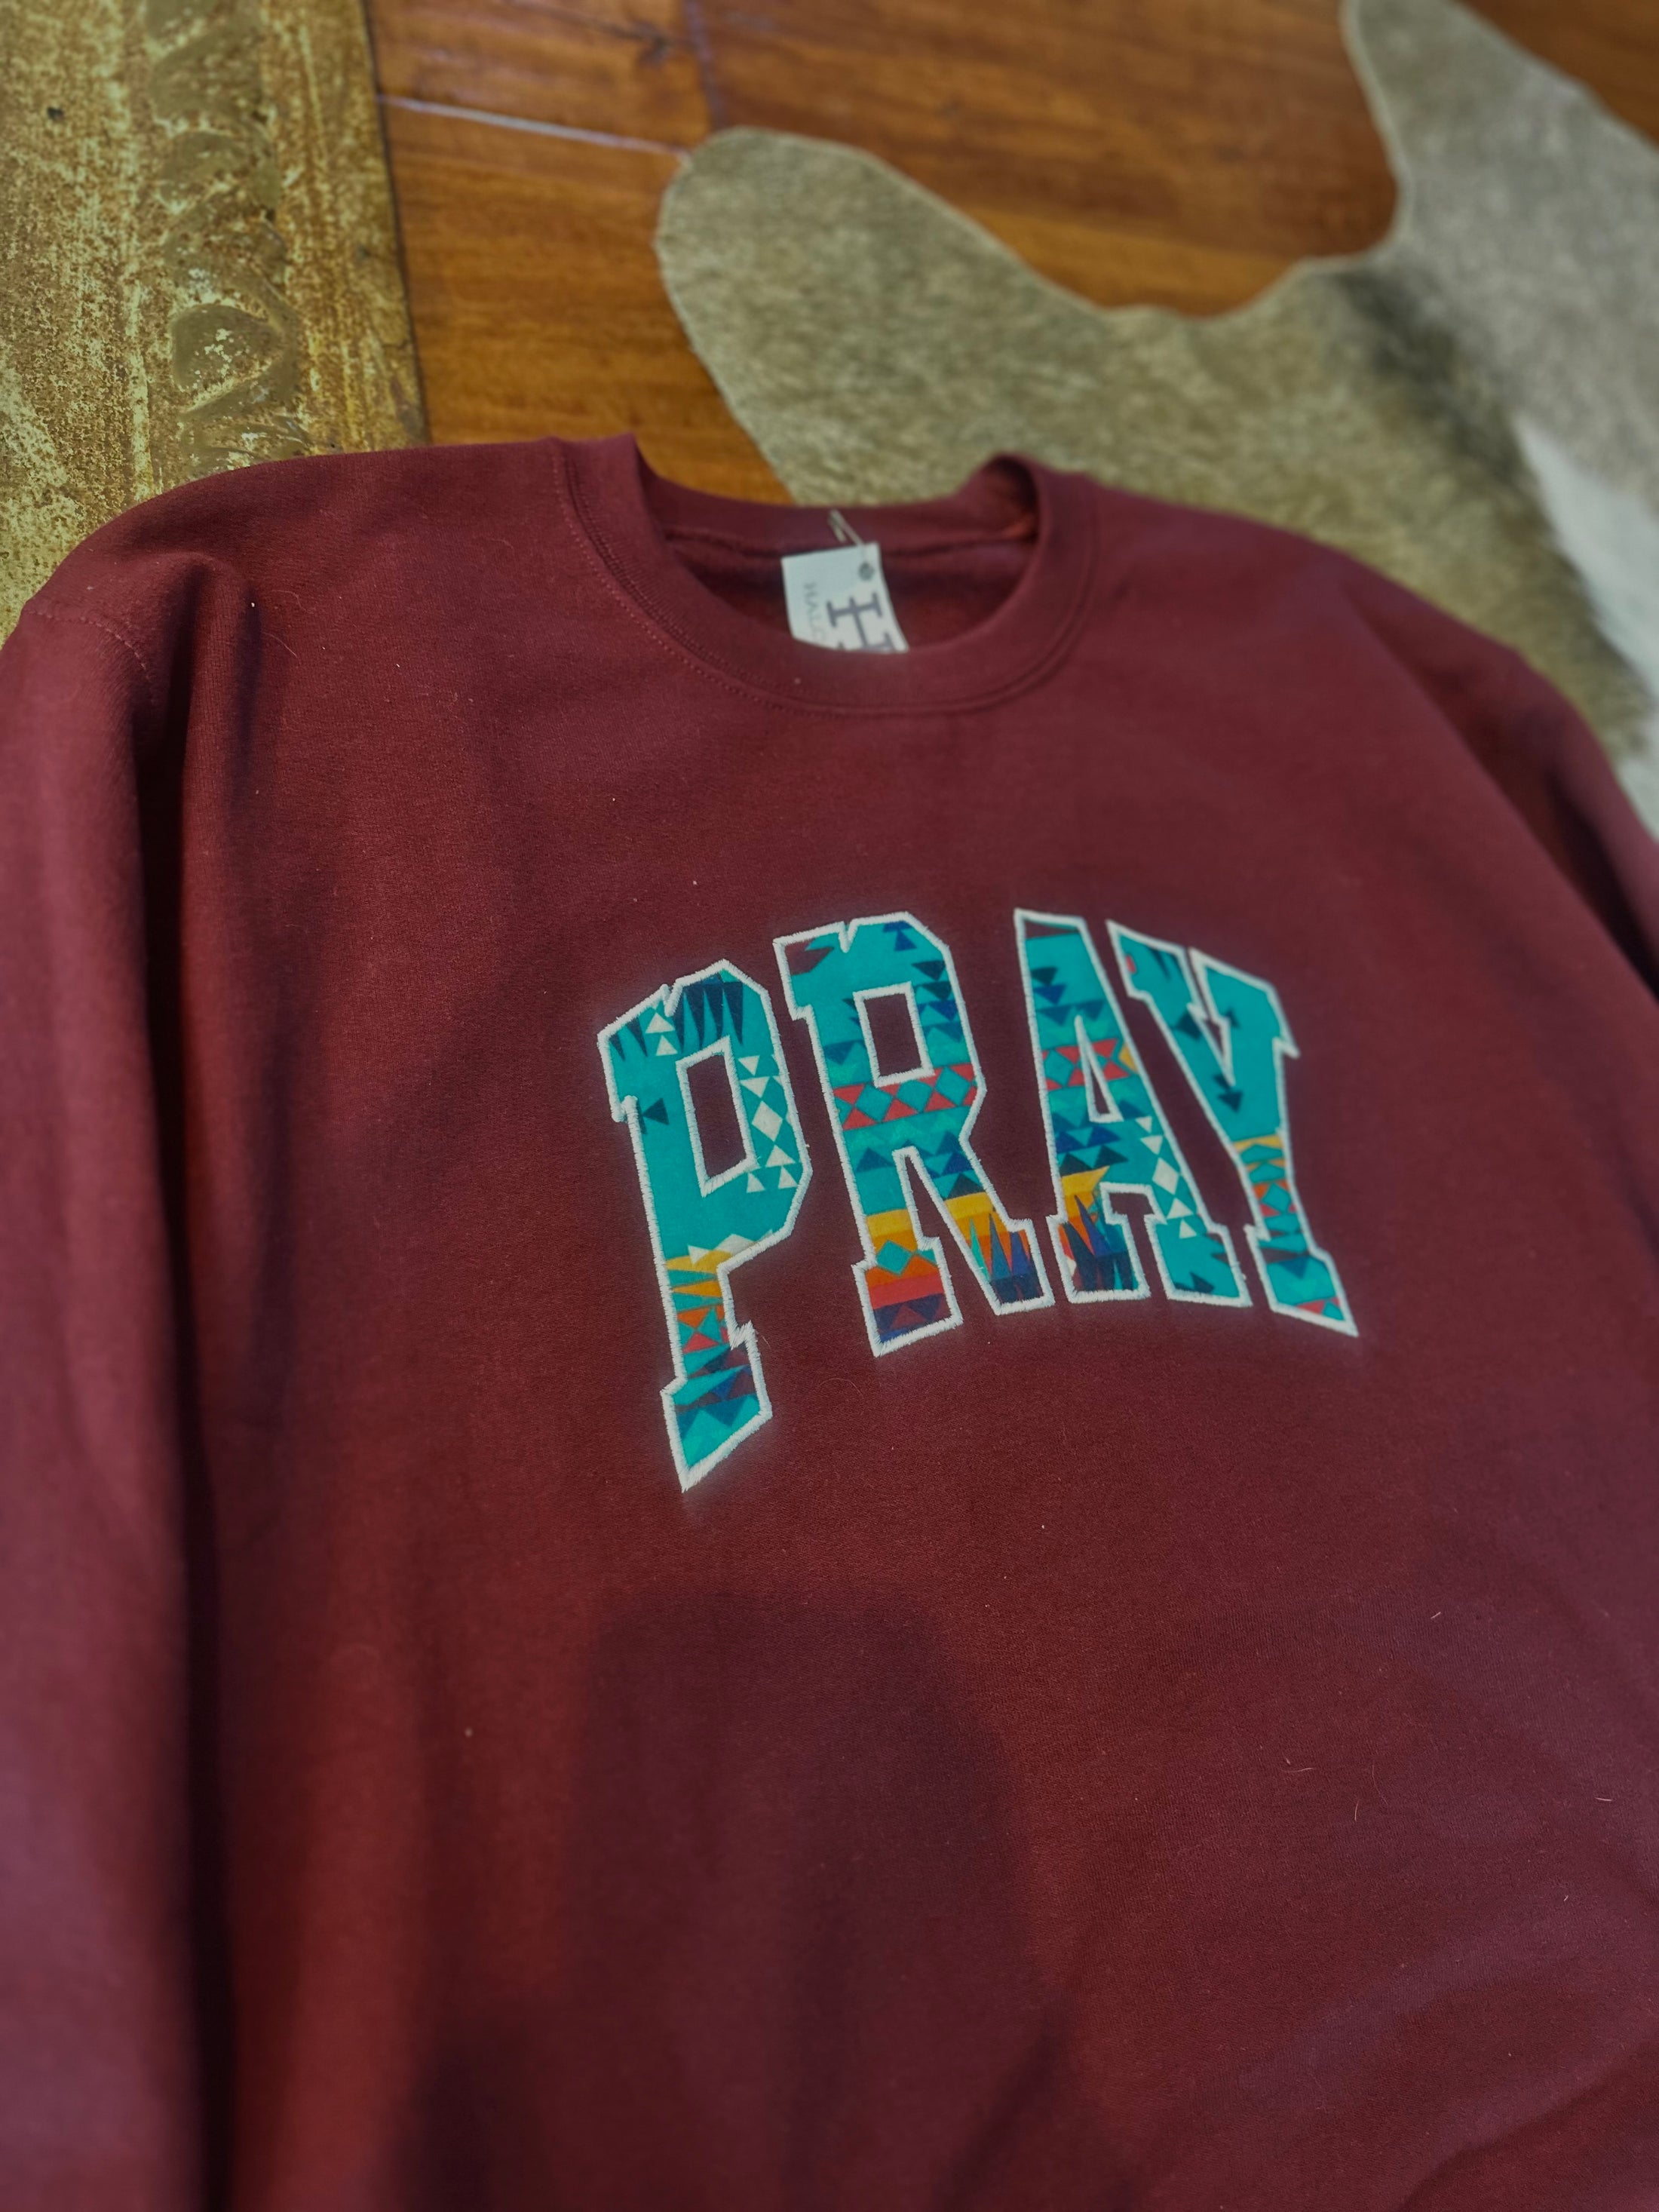 Pray Embroidered Sweatshirt